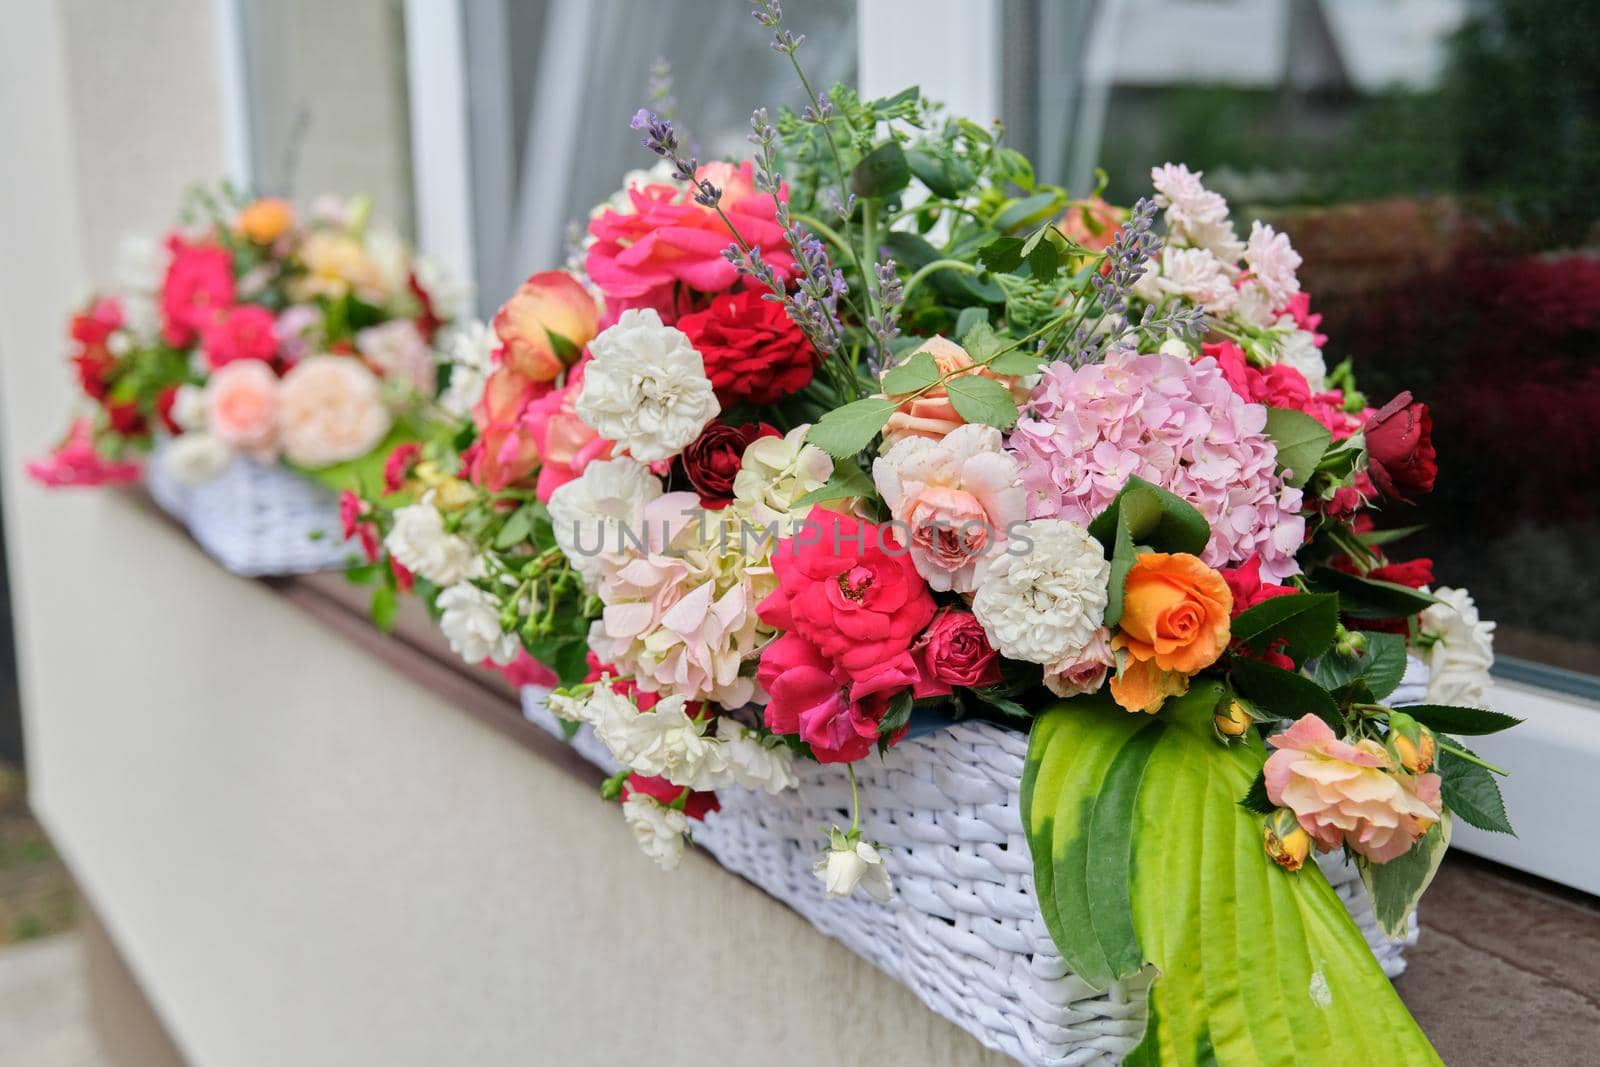 Flower arrangement in a basket. Flower decoration of events, floristry, natural beauty, holidays by VH-studio